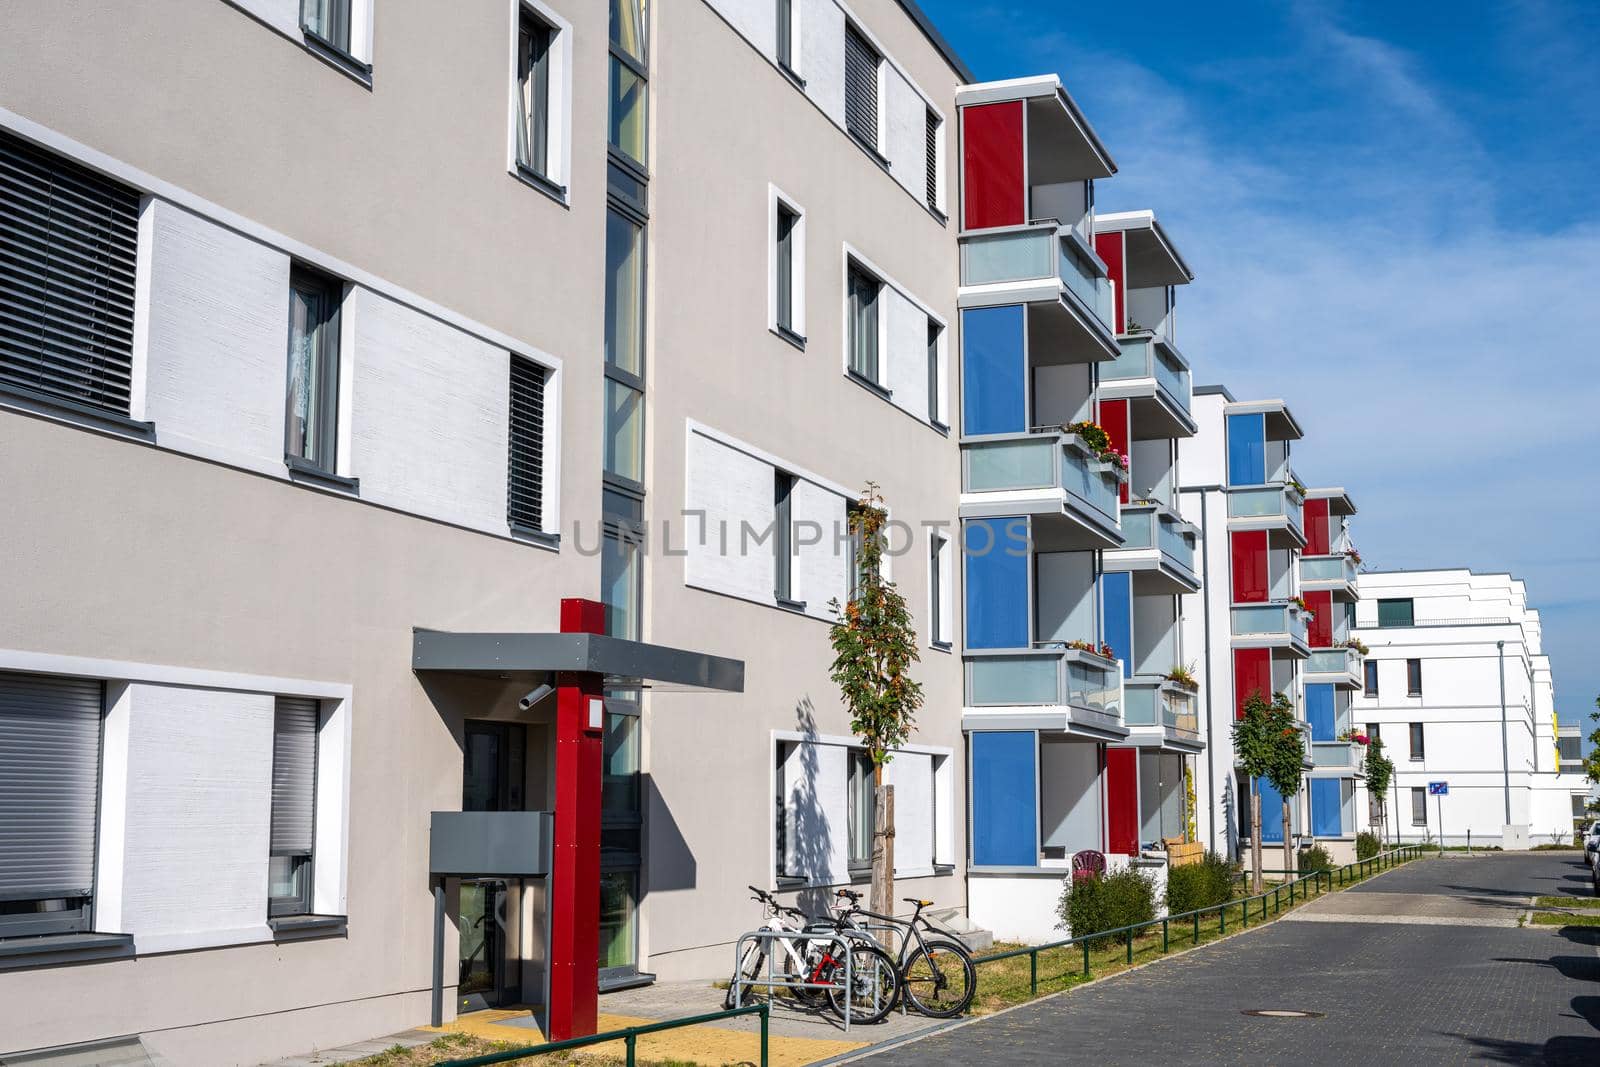 New generic apartment buildings seen in Berlin, Germany